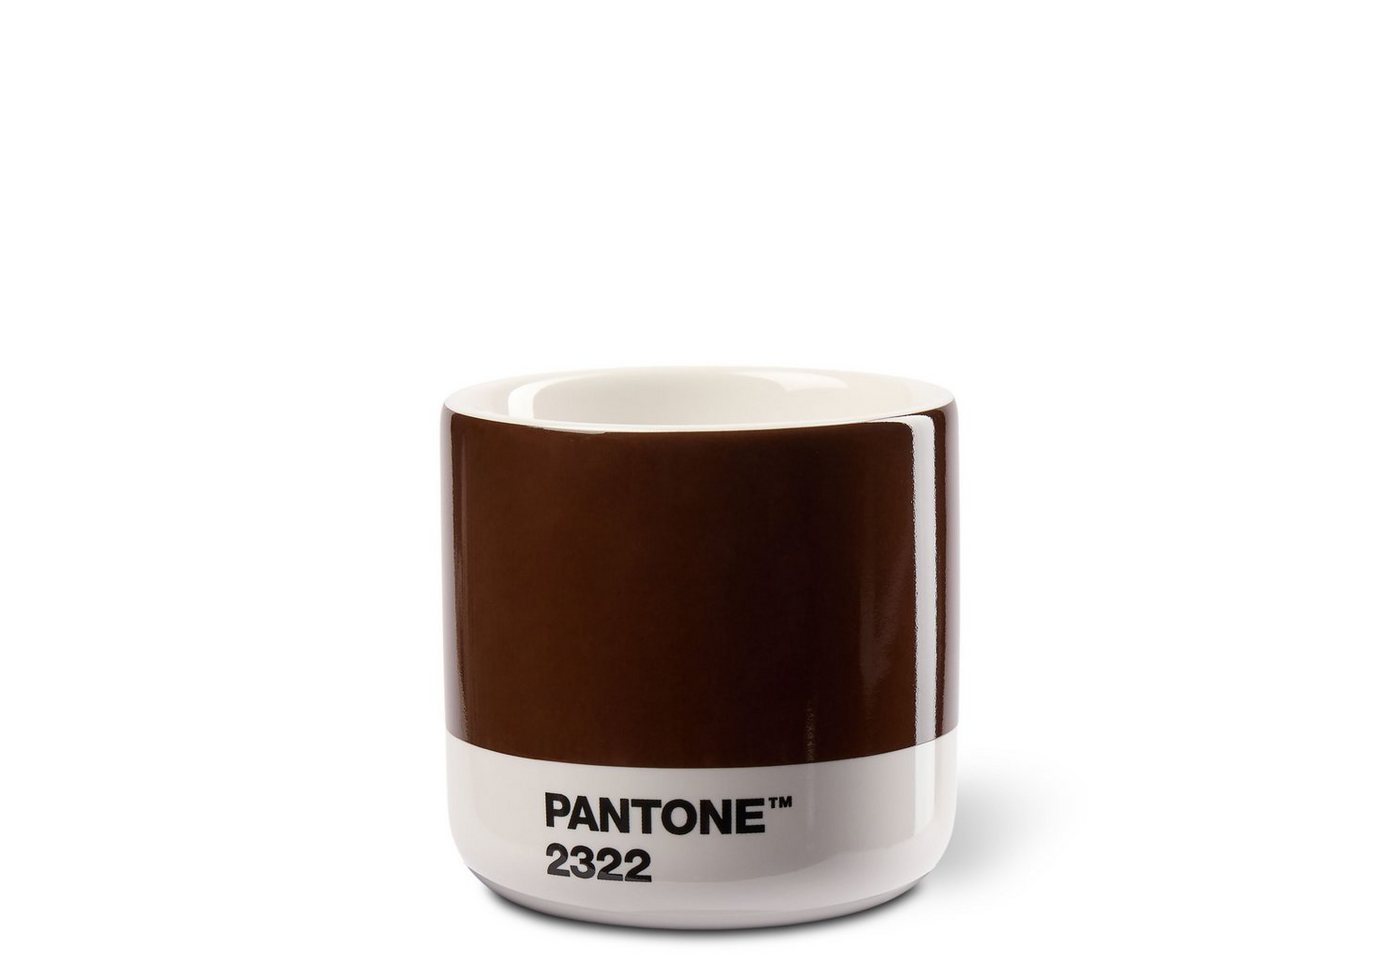 PANTONE Kaffeeservice, PANTONE Porzellan Macchiato Thermobecher von PANTONE